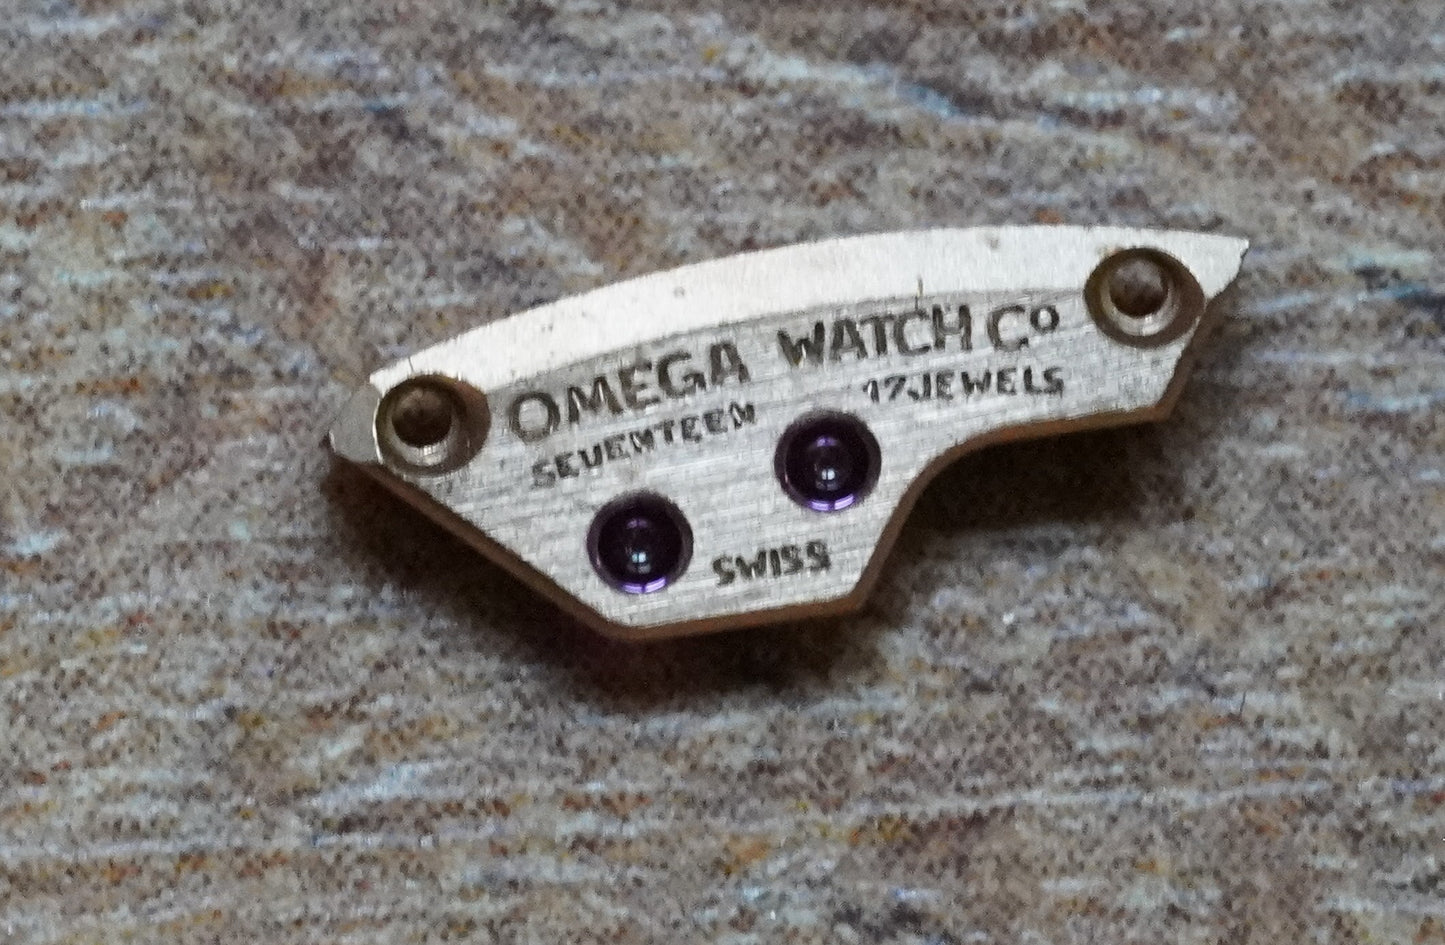 Omega cal 485 part 1003 Train wheel bridge